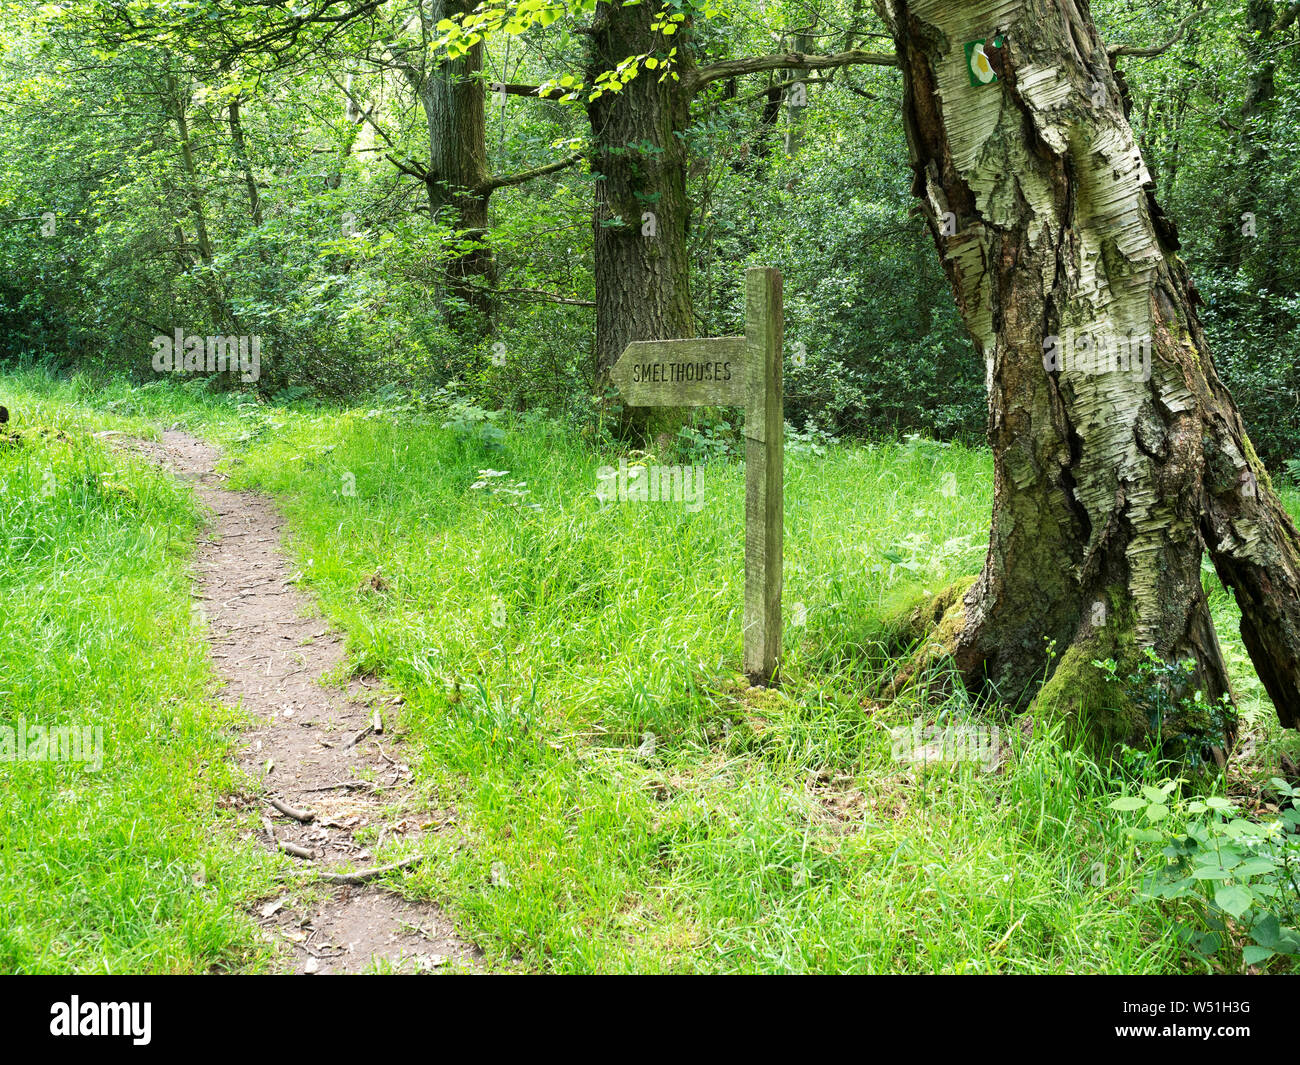 Smelthouses public footpath sign in woodland near White Houses Pateley Bridge Nidderdale North Yorkshire England Stock Photo